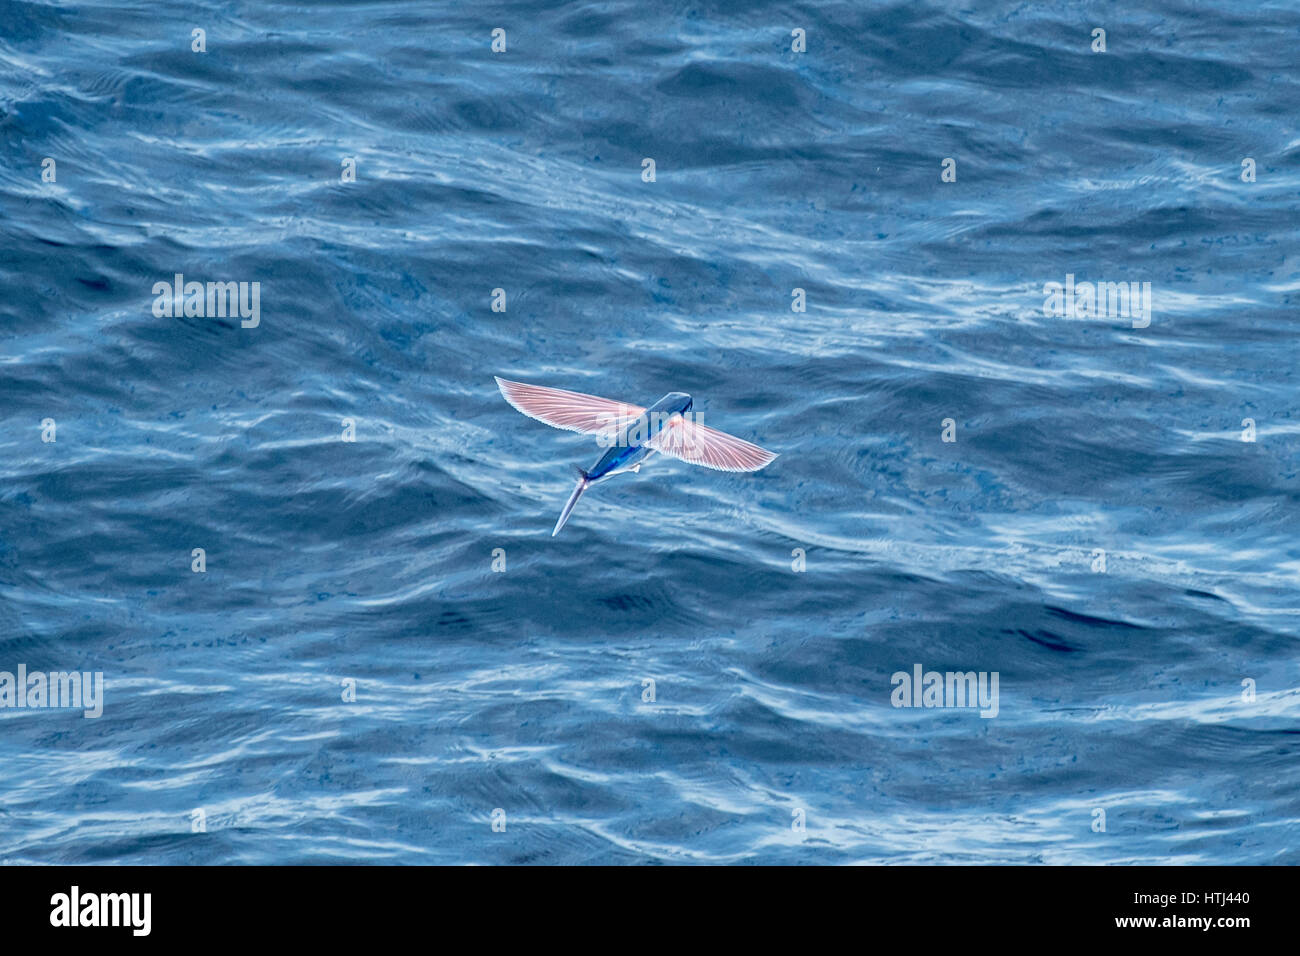 Sailfin Flying Fish, Parexocoetus brachypterus, in mid air, several hundred miles off Mauritania, North Africa, North Atlantic Ocean Stock Photo